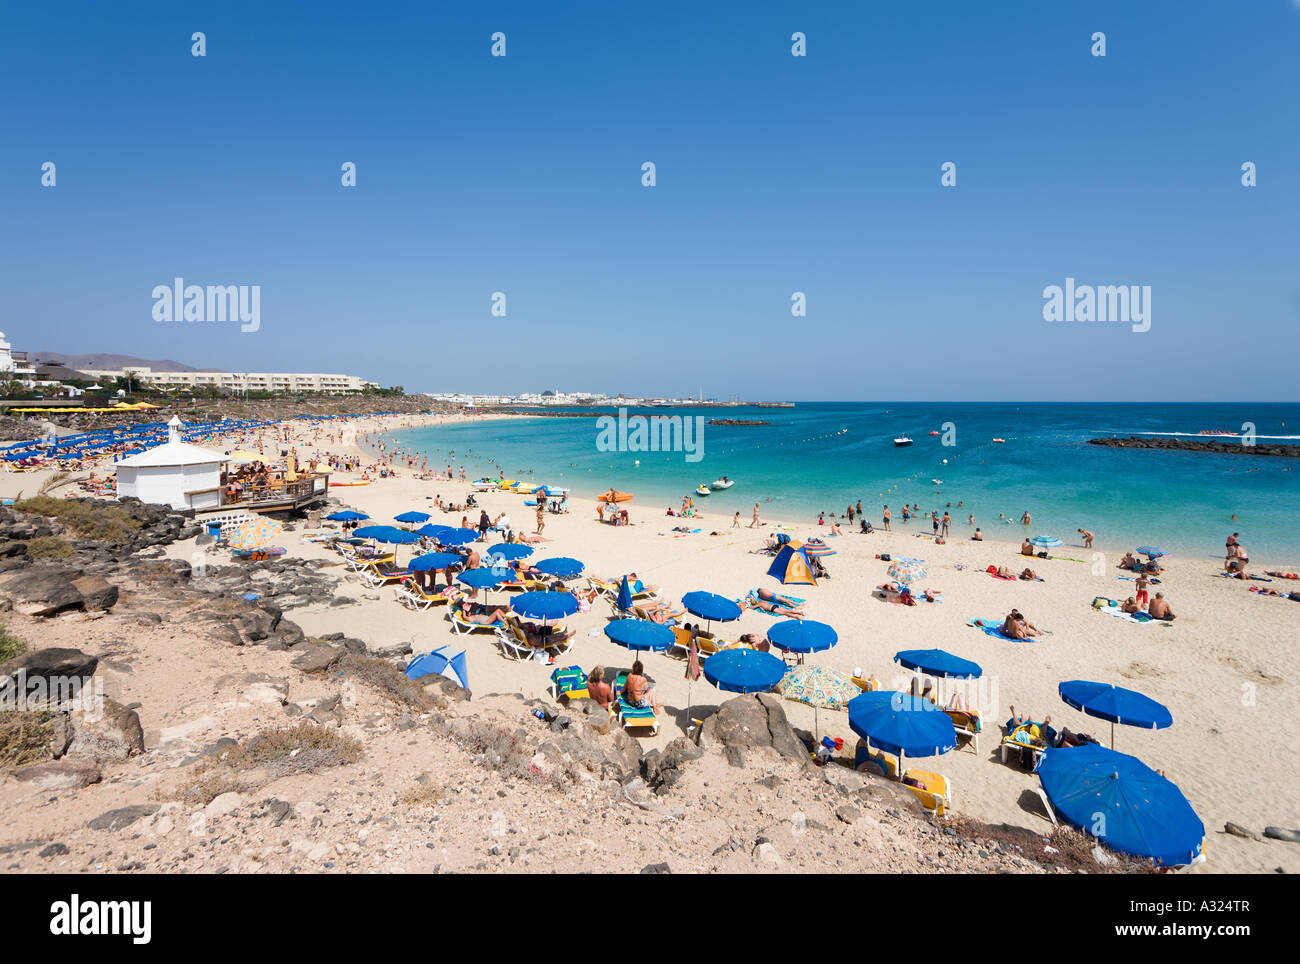 Main Beach, Playa Blanca, Lanzarote, îles Canaries, Espagne Banque D'Images